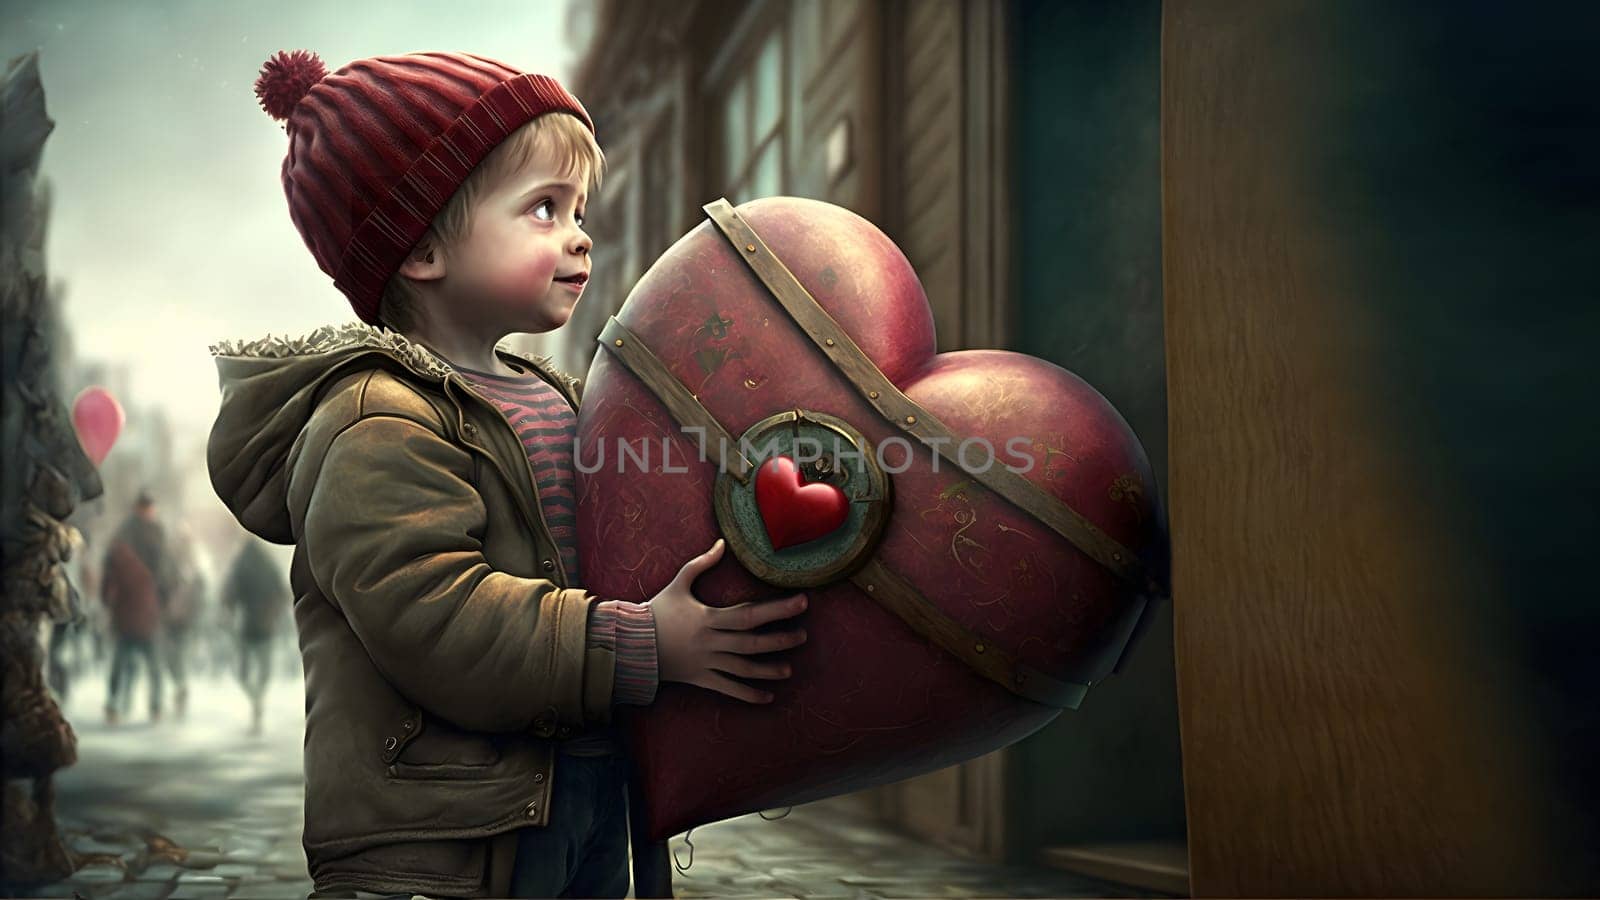 little caucasian boy holding big heart-shaped object on city street, neural network generated art by z1b